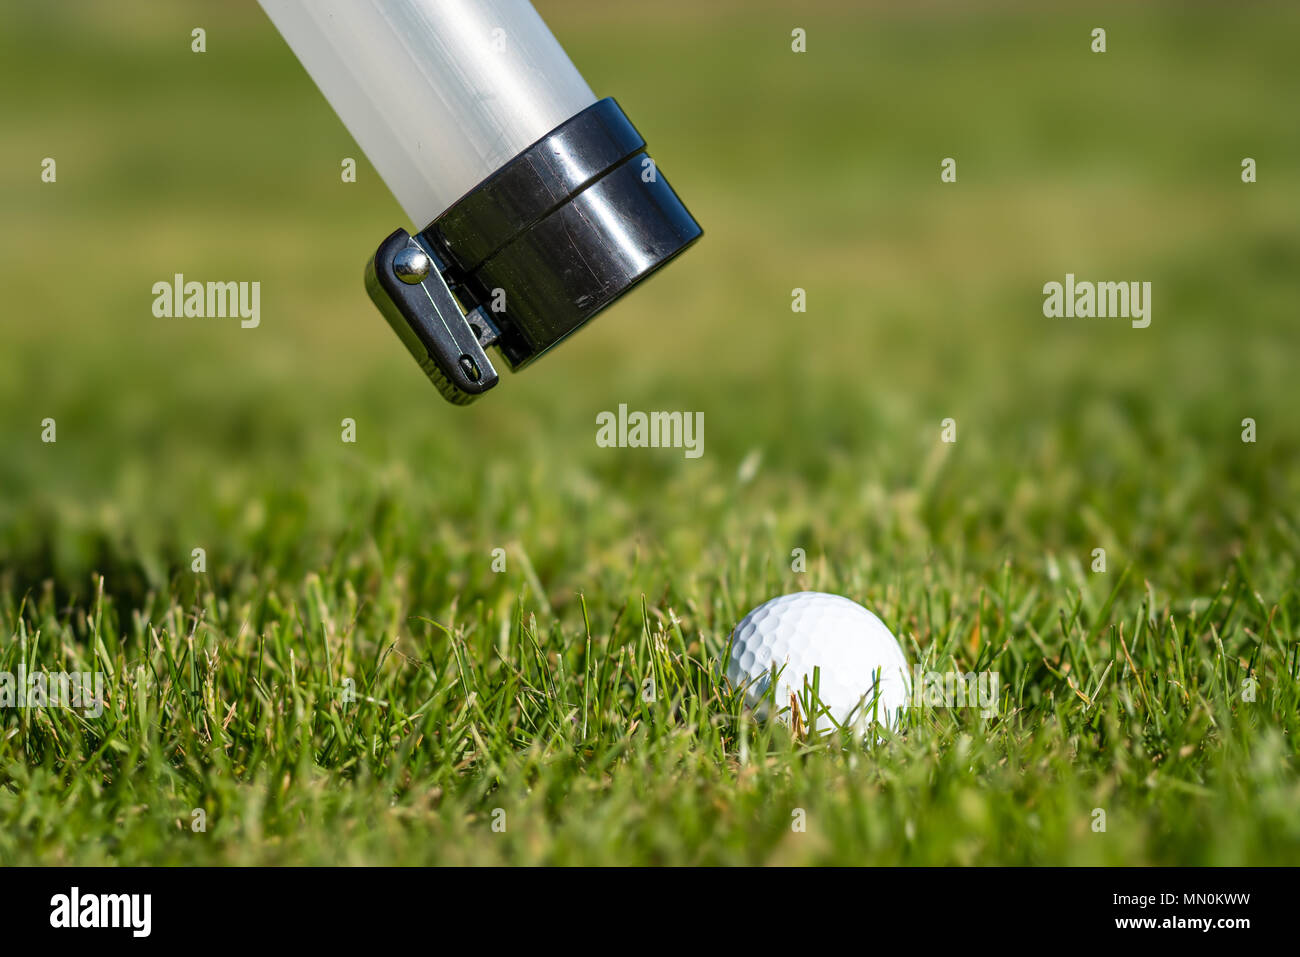 Ball tube picking up a golf ball Stock Photo